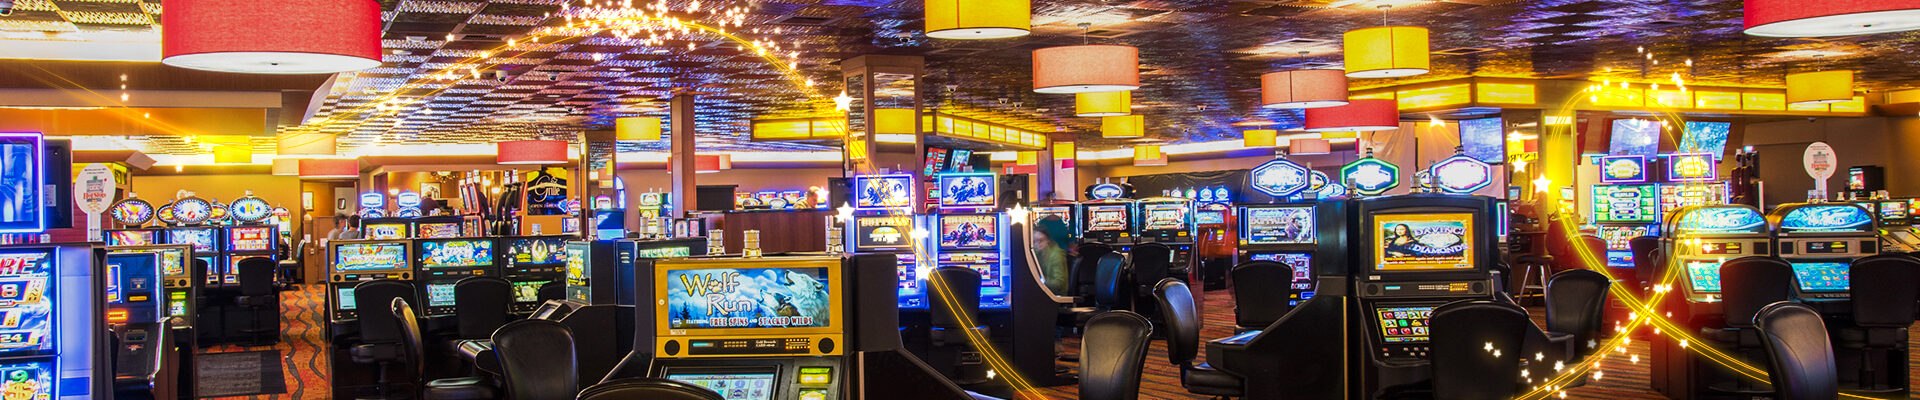 GDW_Reno_Sub-Casino